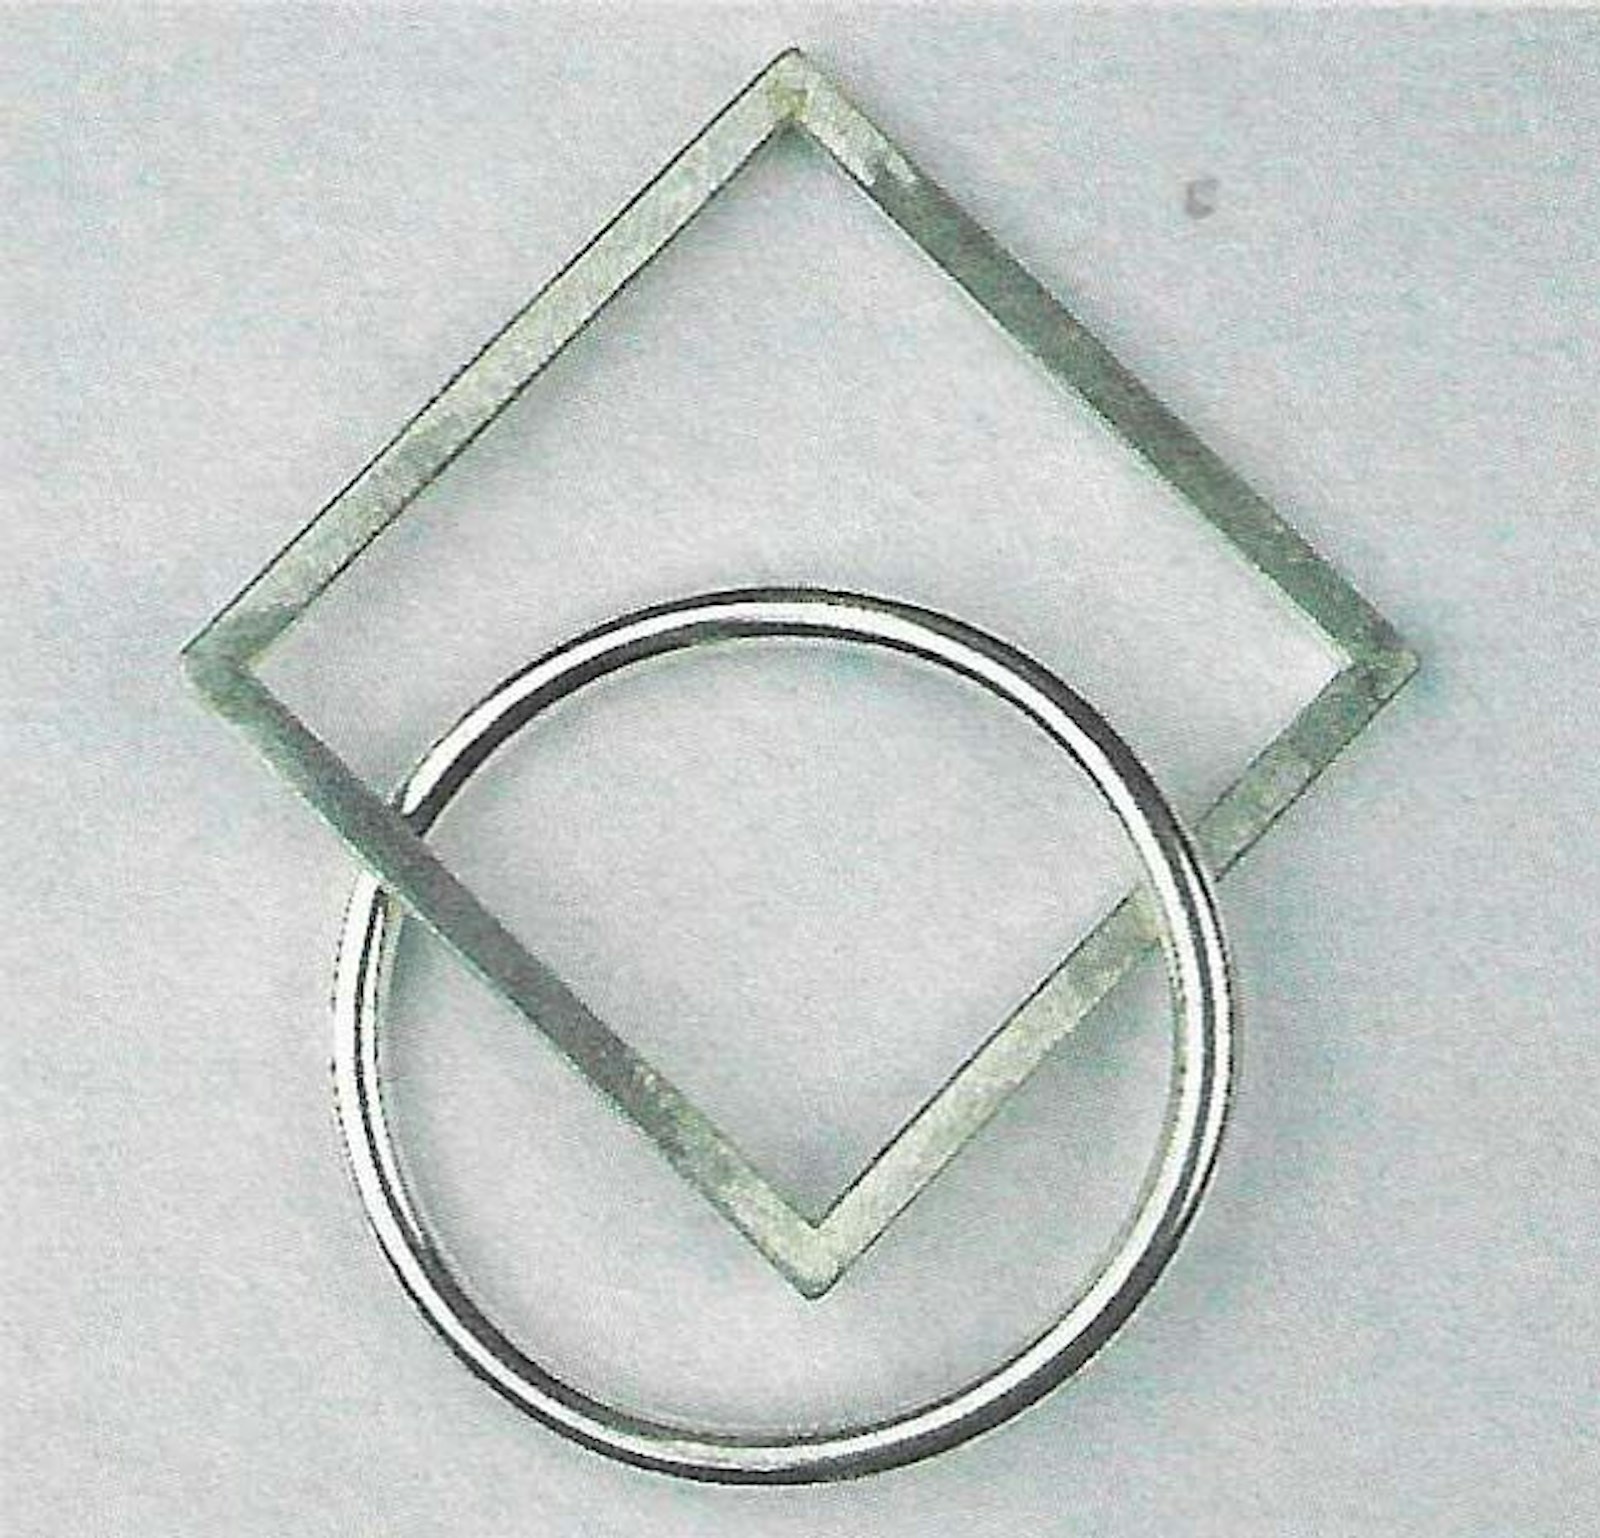 'Arm-vorm cirkel vierkant' 1996; zilver; 7,8 x 7,8 cm (vierkant), diam. 7,8 cm (cirkel). © Johan Hespeel